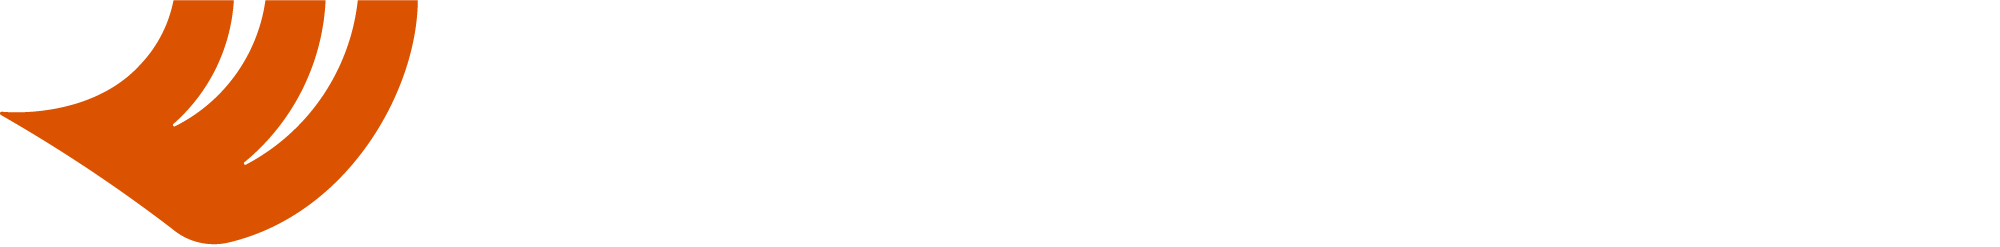 hankook-logo-white